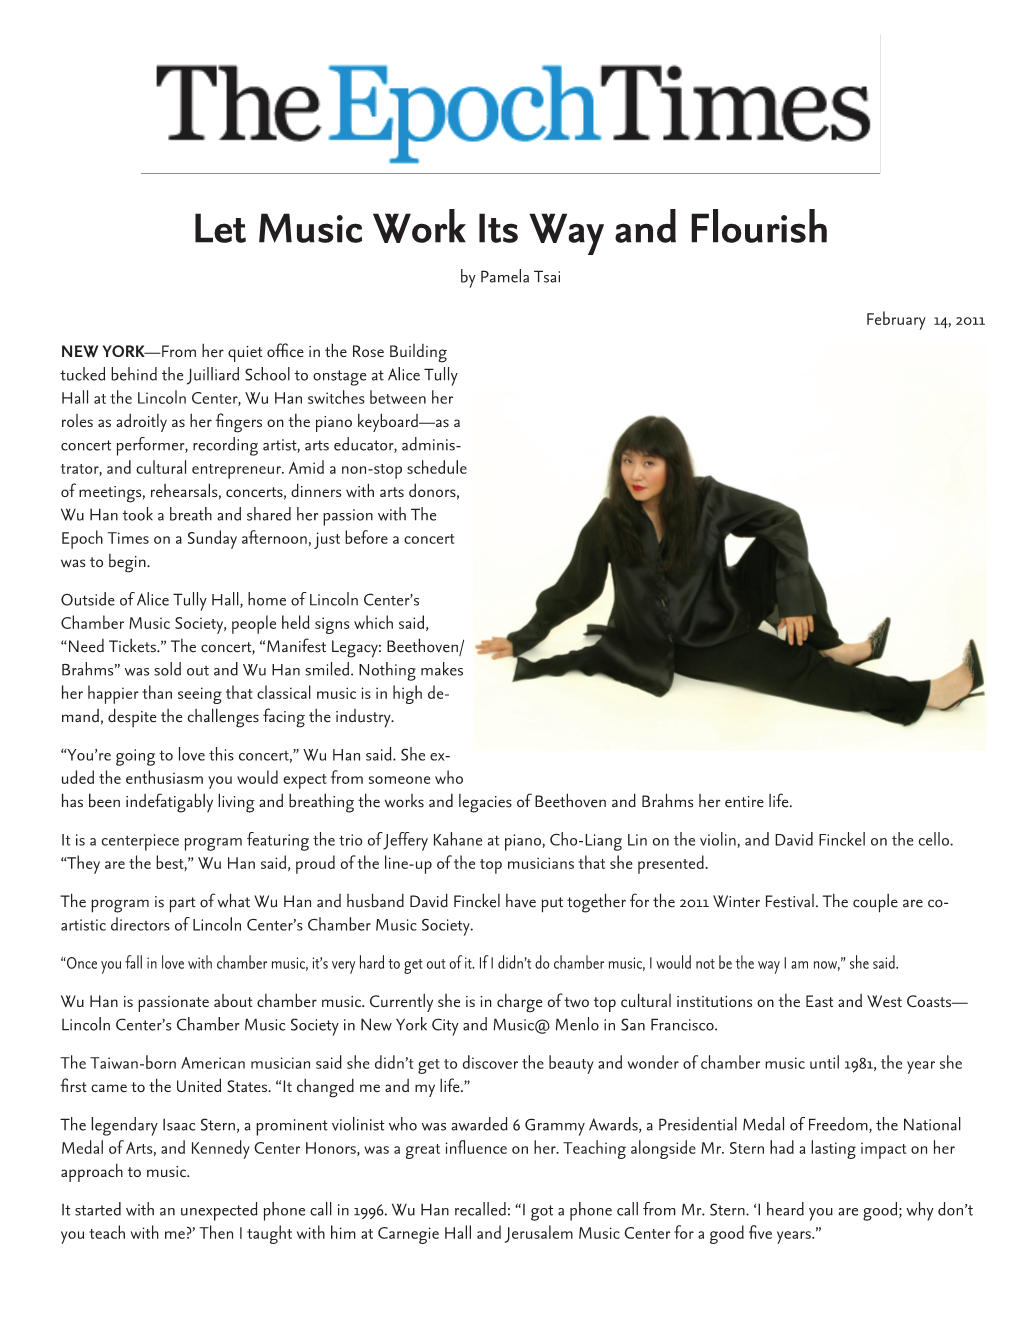 Let Music Work Its Way and Flourish by Pamela Tsai